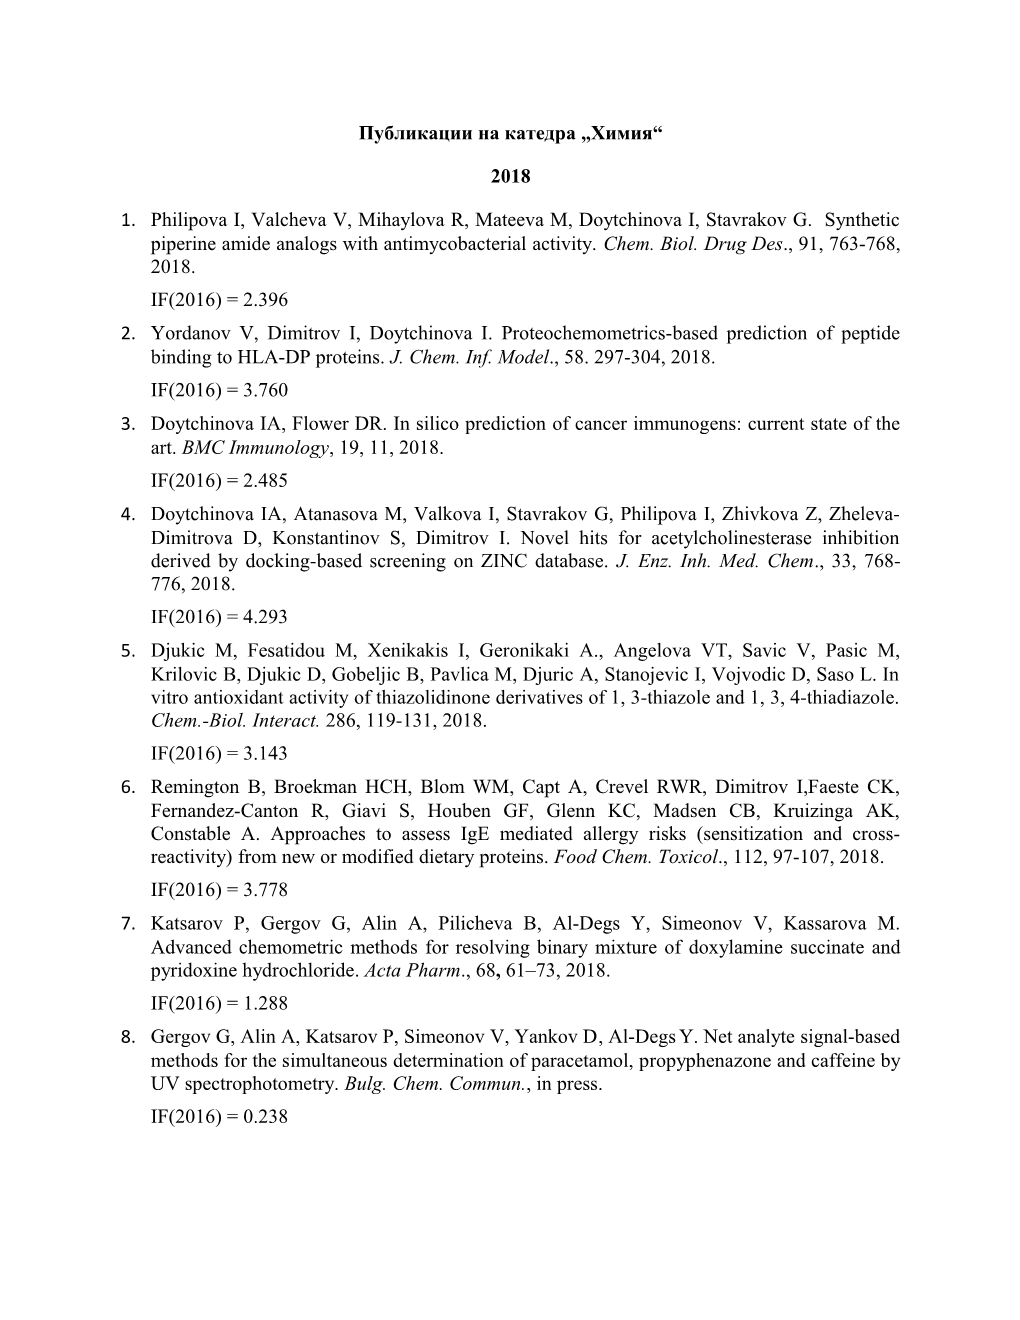 1. Philipova I, Valcheva V, Mihaylova R, Mateeva M, Doytchinova I, Stavrakov G. Synthetic